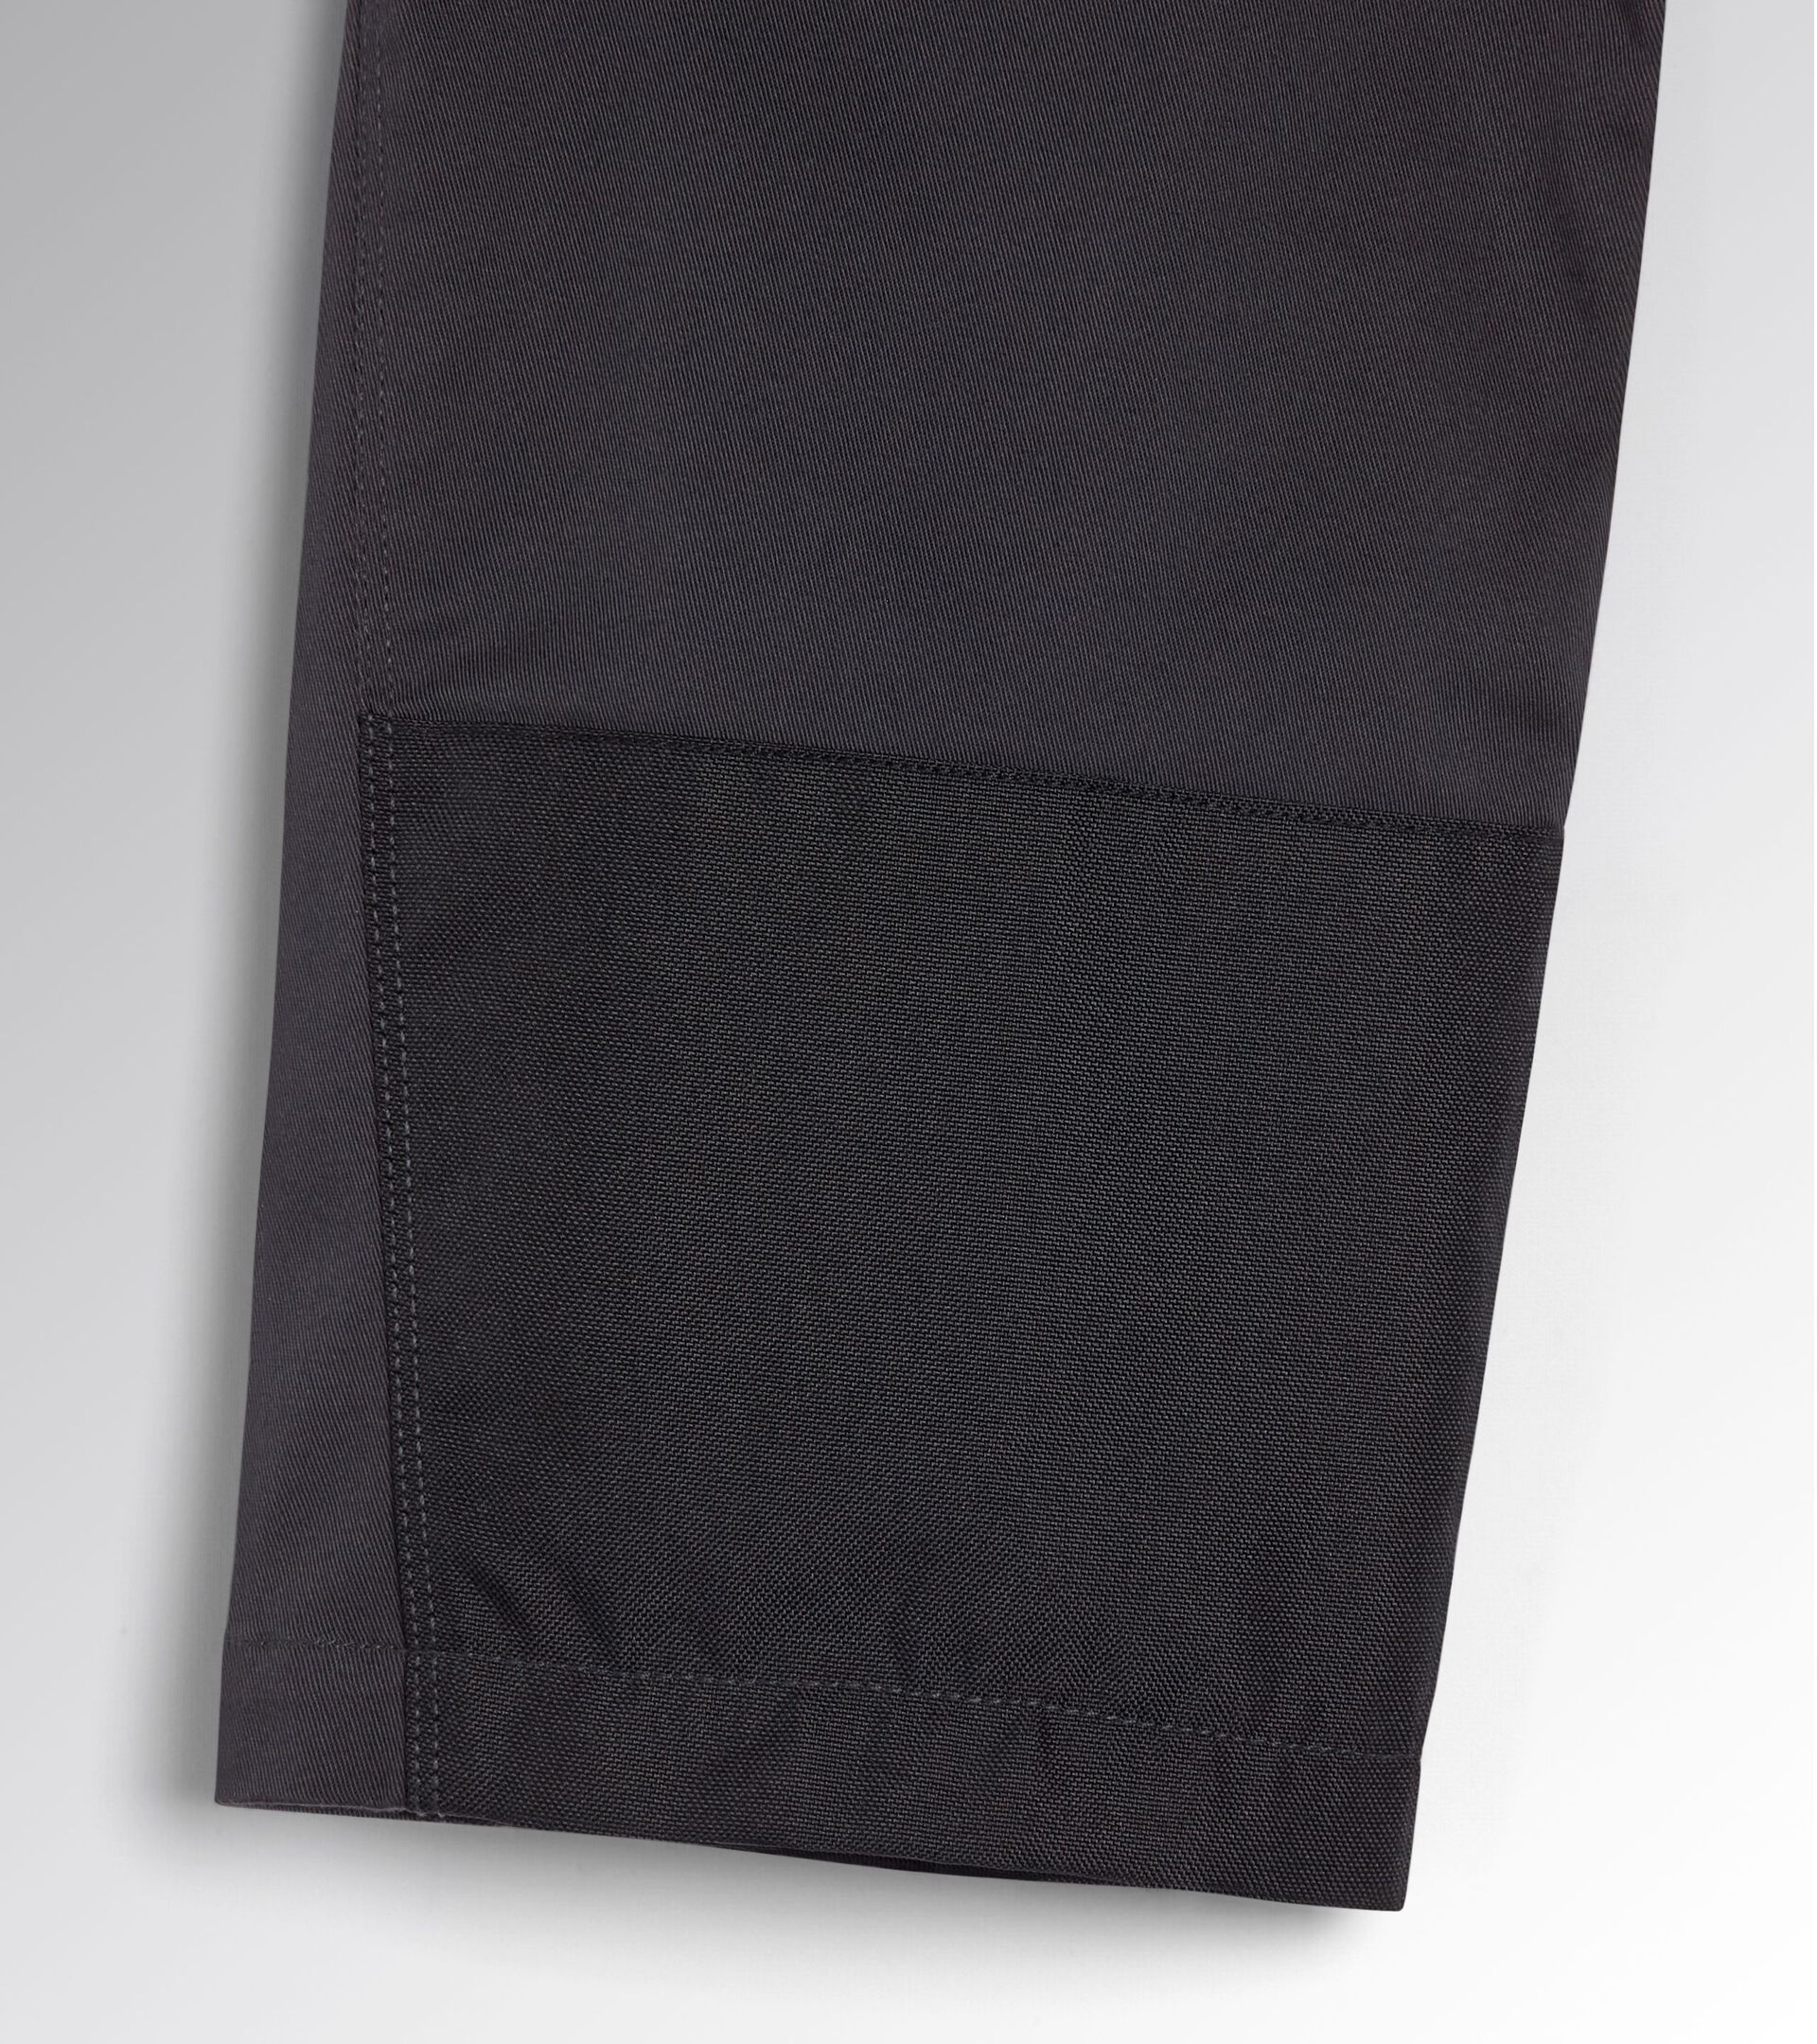 Work trousers PANT HYBRID POLY PERFORMANCE BLACK/PHANTOM - Utility